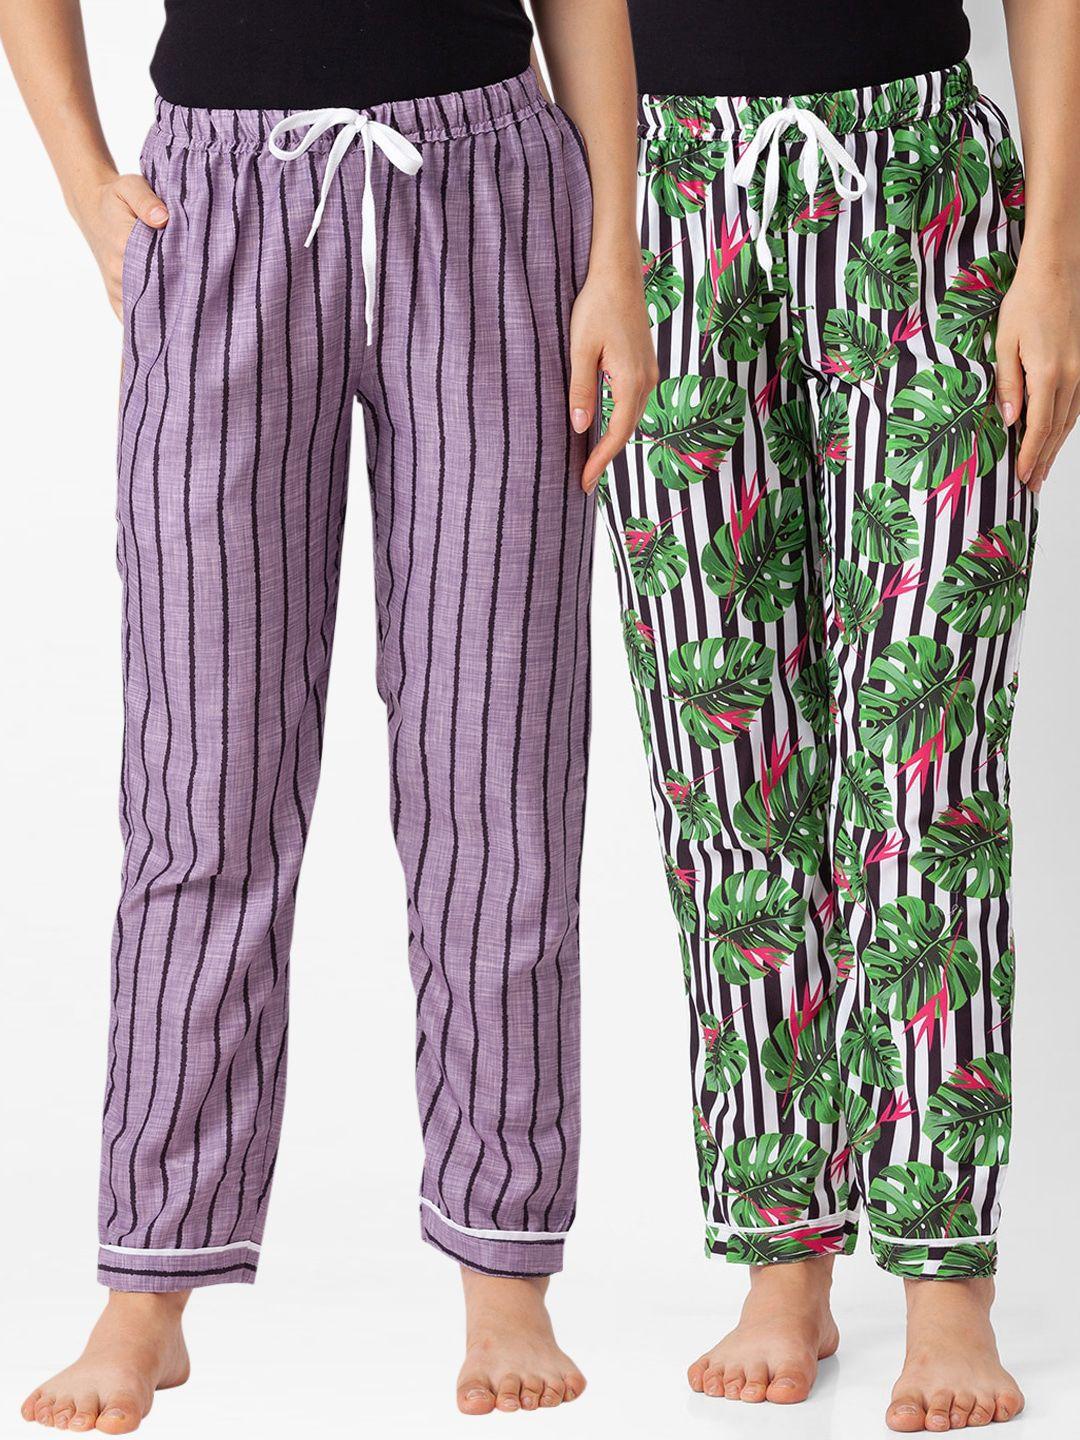 fashionrack women pack of 2 violet & green printed cotton lounge pants